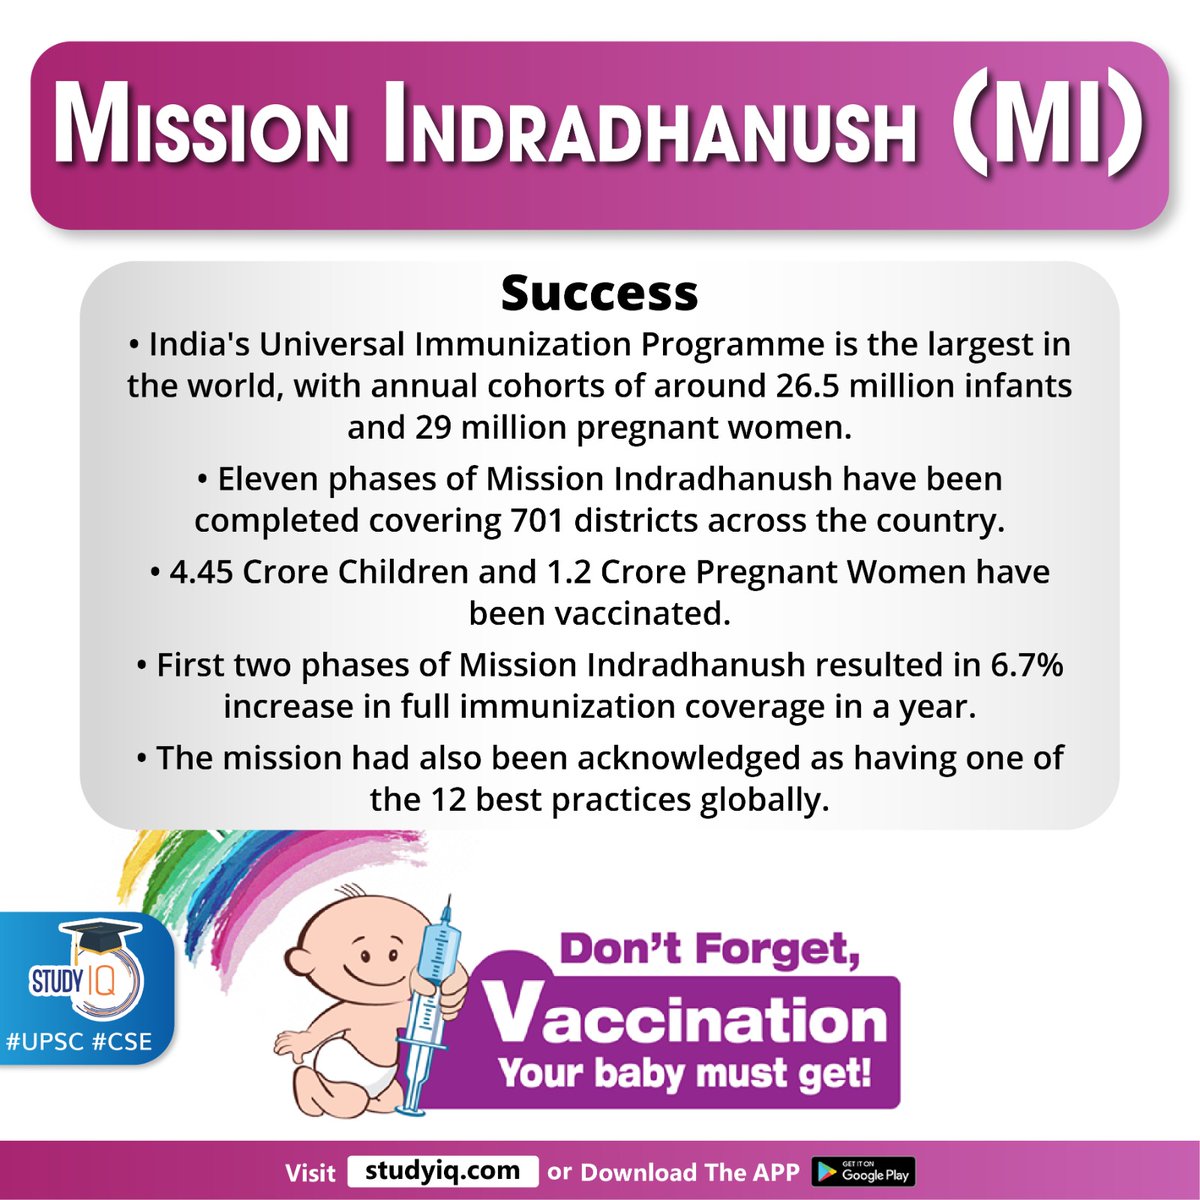 Mission Indradhanush

#missionindradhanush #mi #whyinnews #uttarpradesh #ashawarkers #newbornimmunizations #newbornbaby #universalimmunizationprogram #uip #pregnantwomen #ministryofhealthandfamilywelfare #childmortality #india #upsc #cse #ips #ias